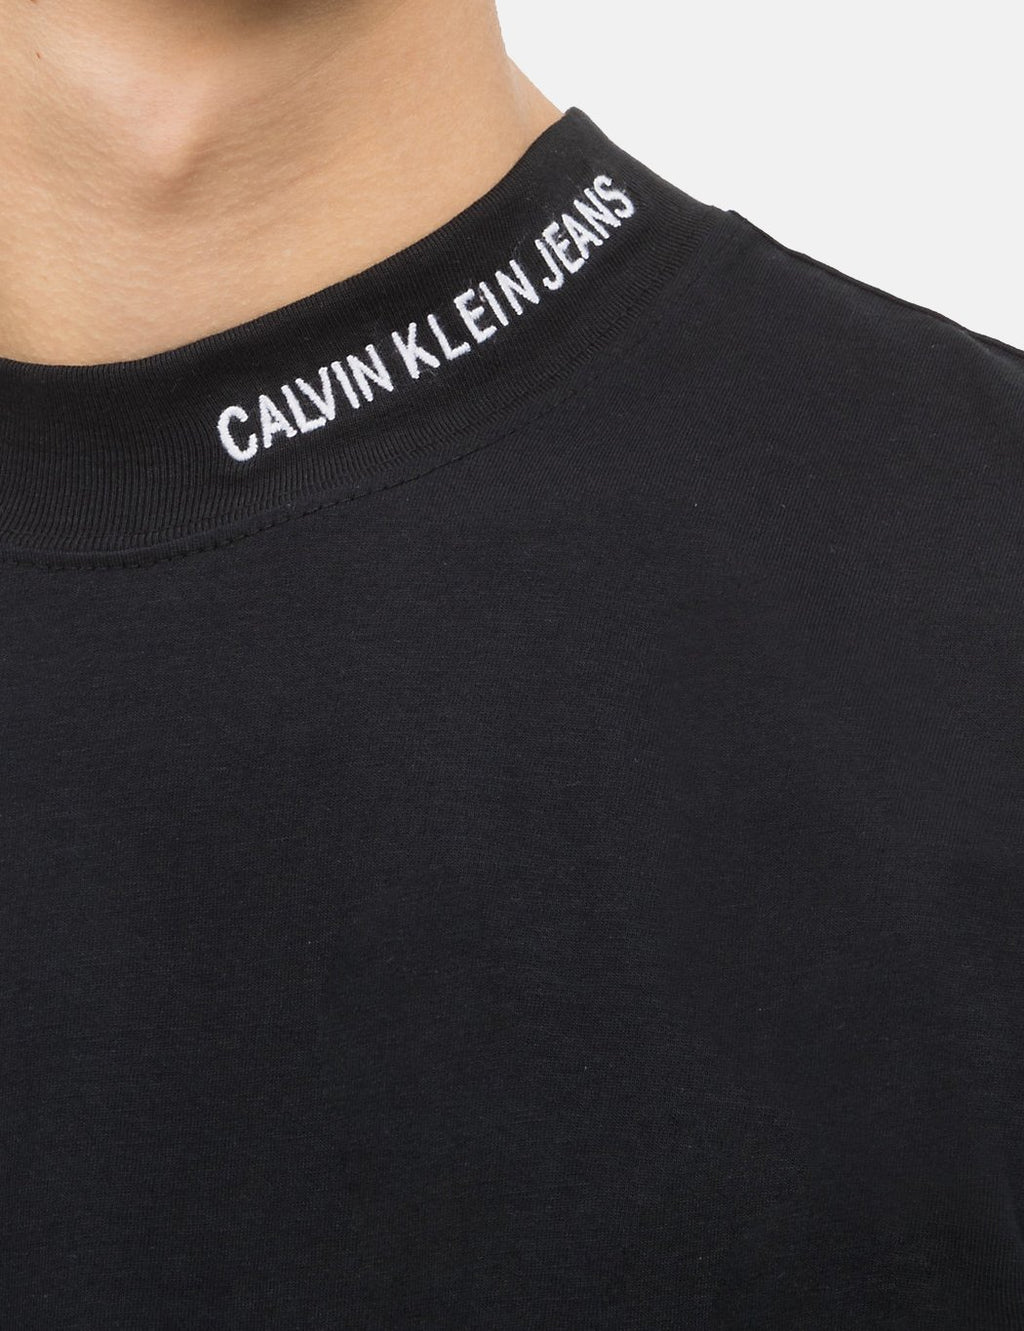 EXCESS Embroidered Klein Neck | URBAN T-Shirt – URBAN Black USA - EXCESS. Calvin Crew